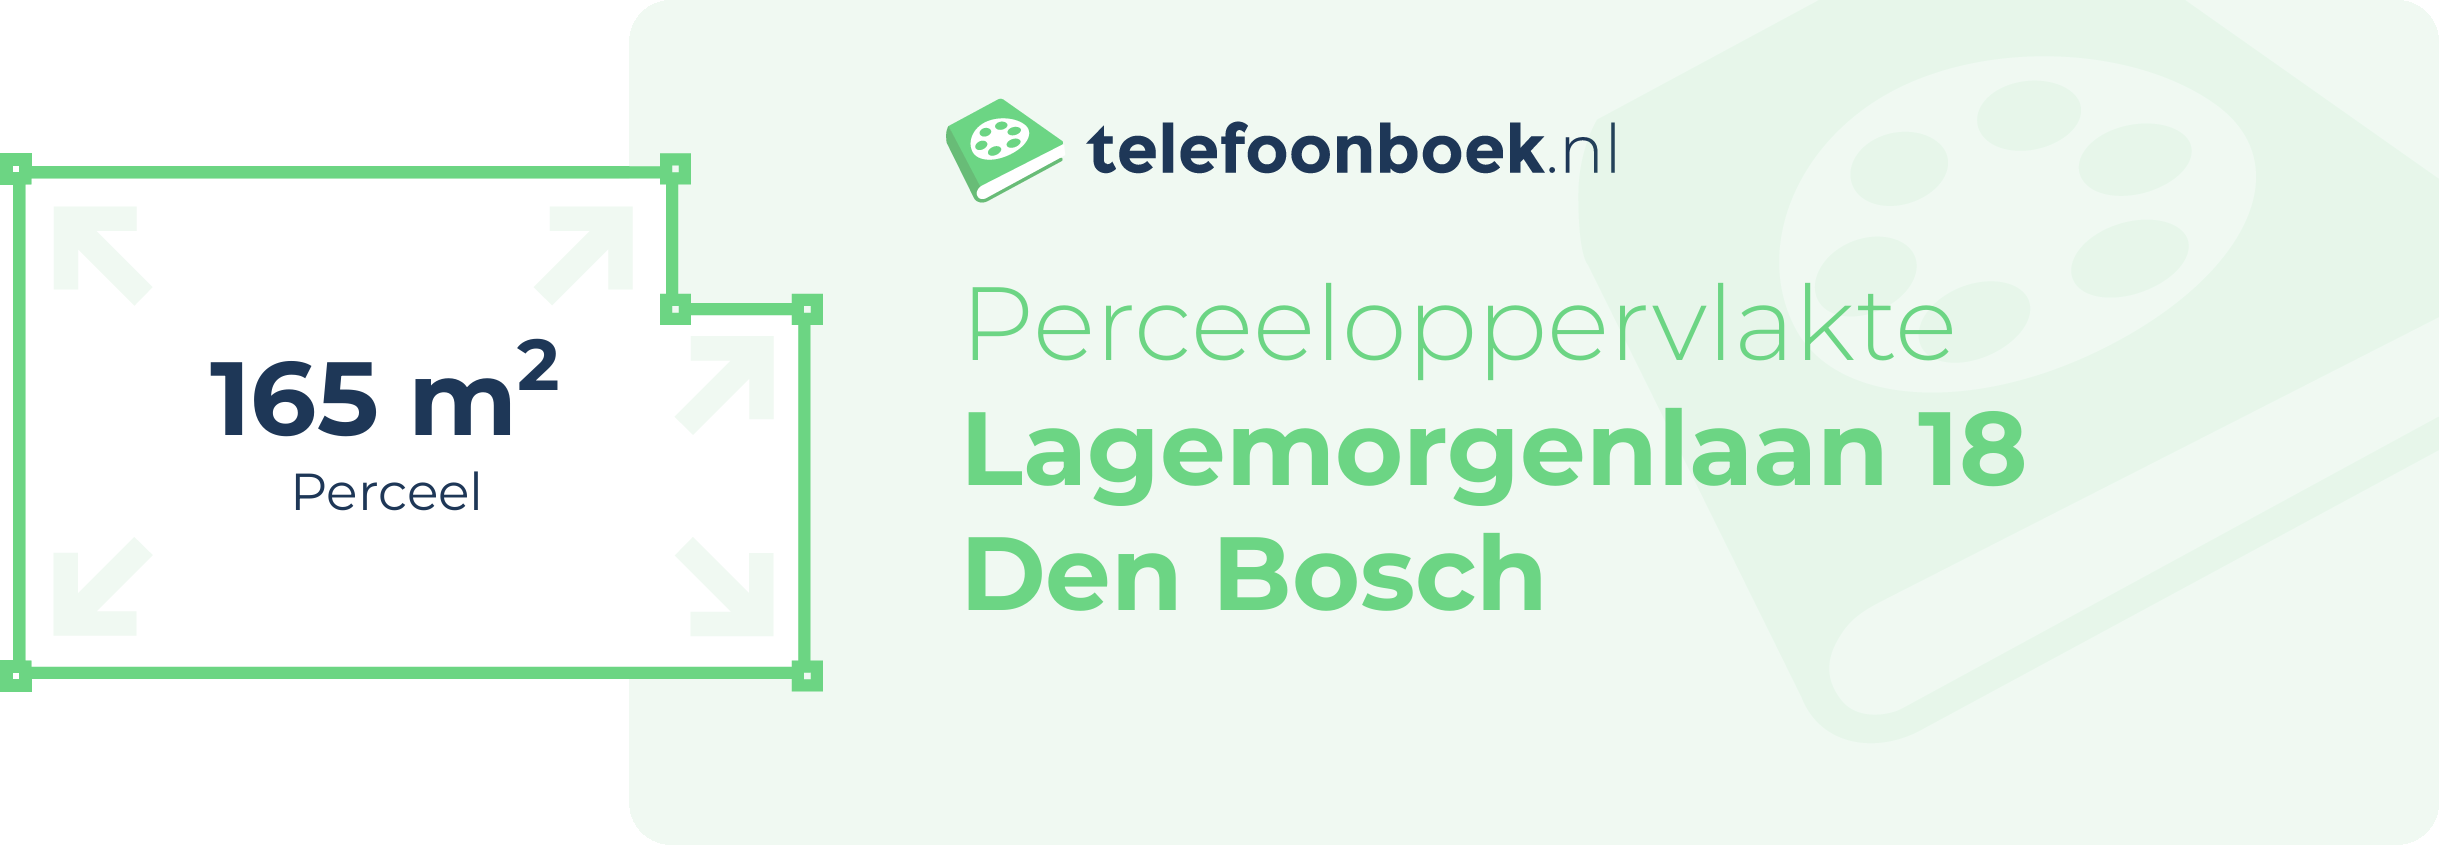 Perceeloppervlakte Lagemorgenlaan 18 Den Bosch